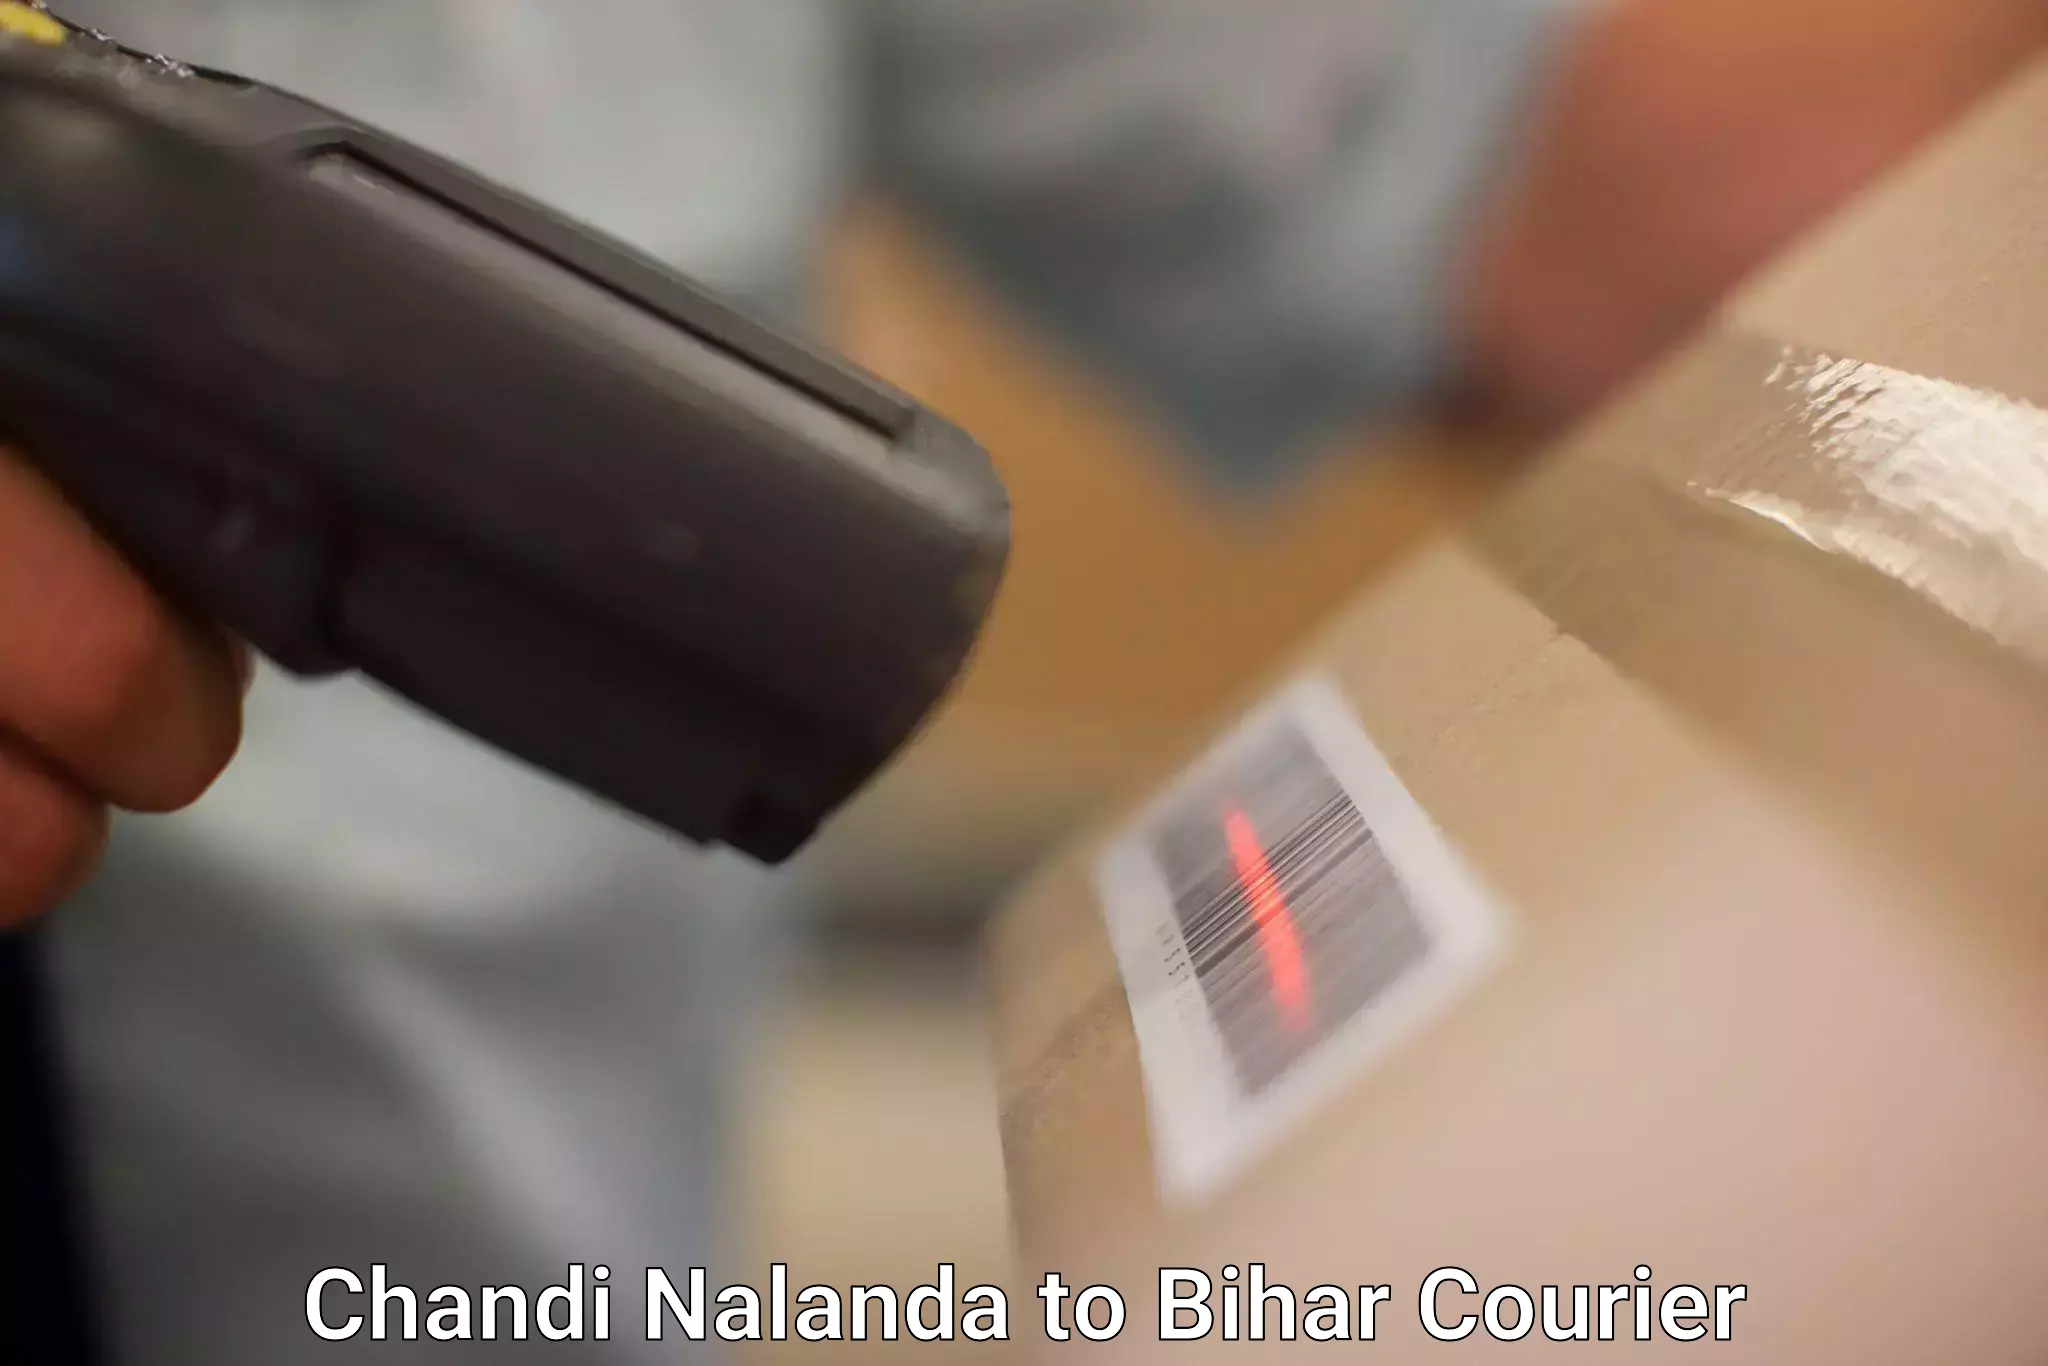 Nationwide delivery network Chandi Nalanda to Kochas